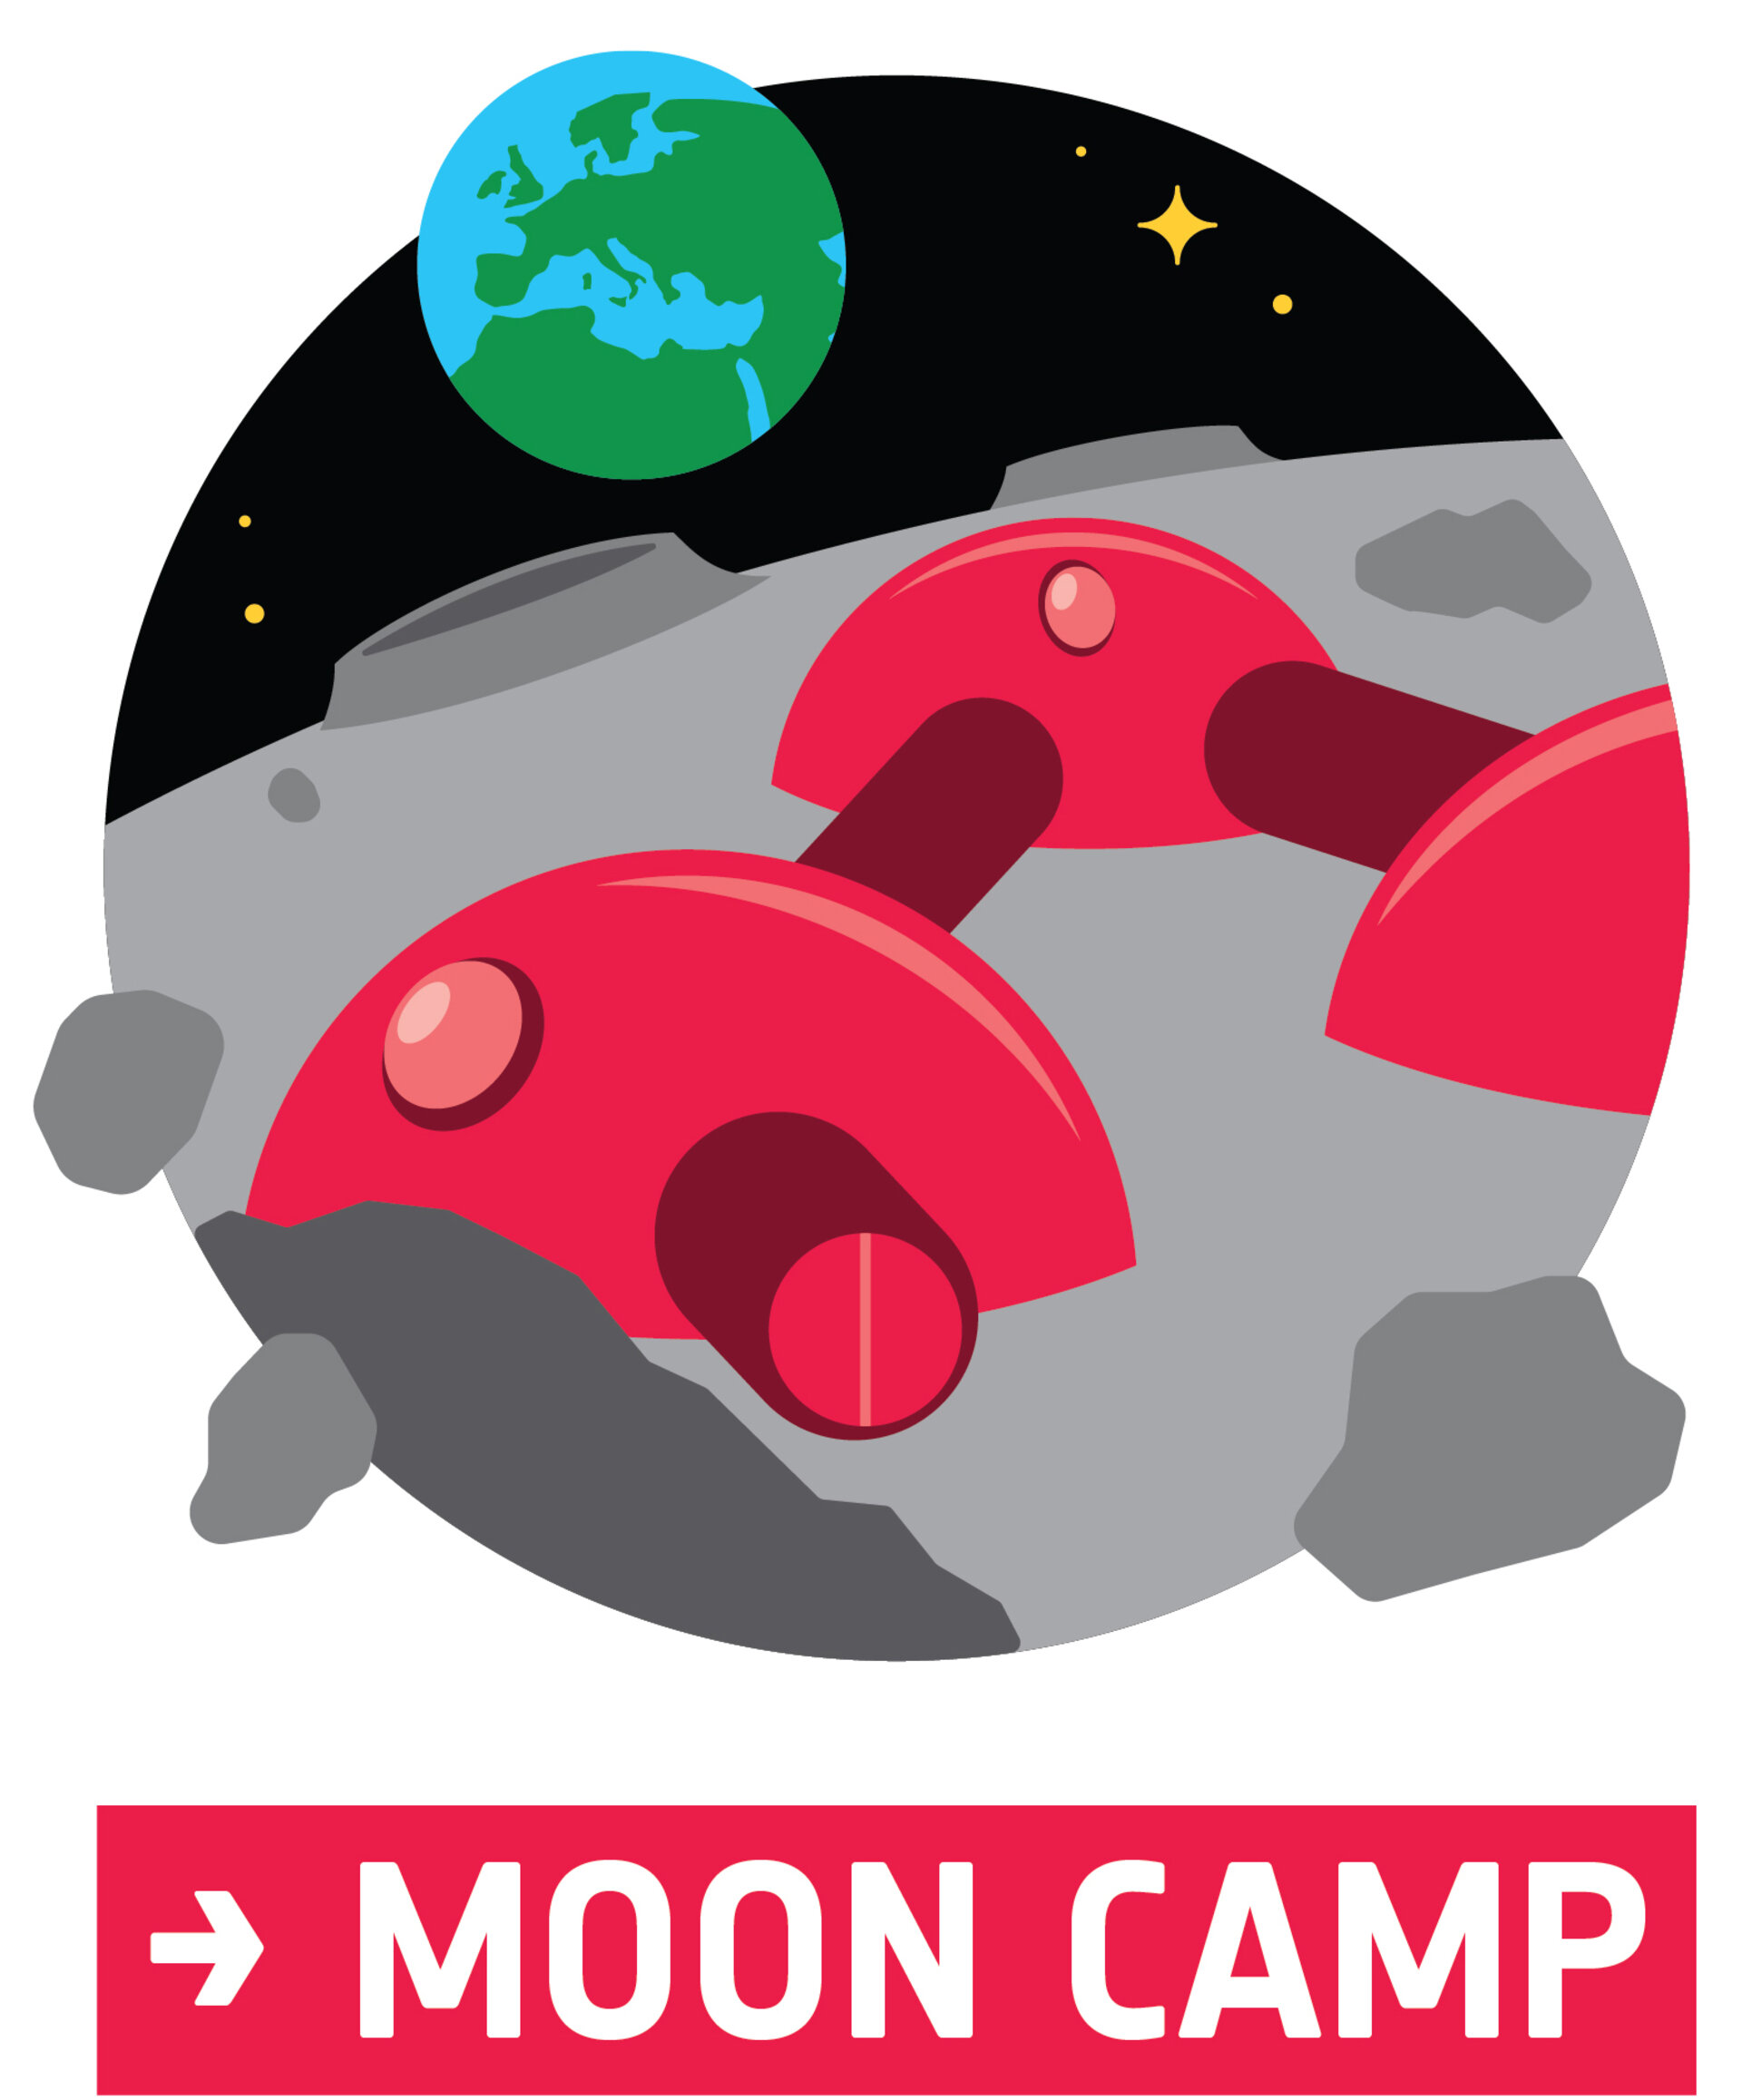 Moon camp